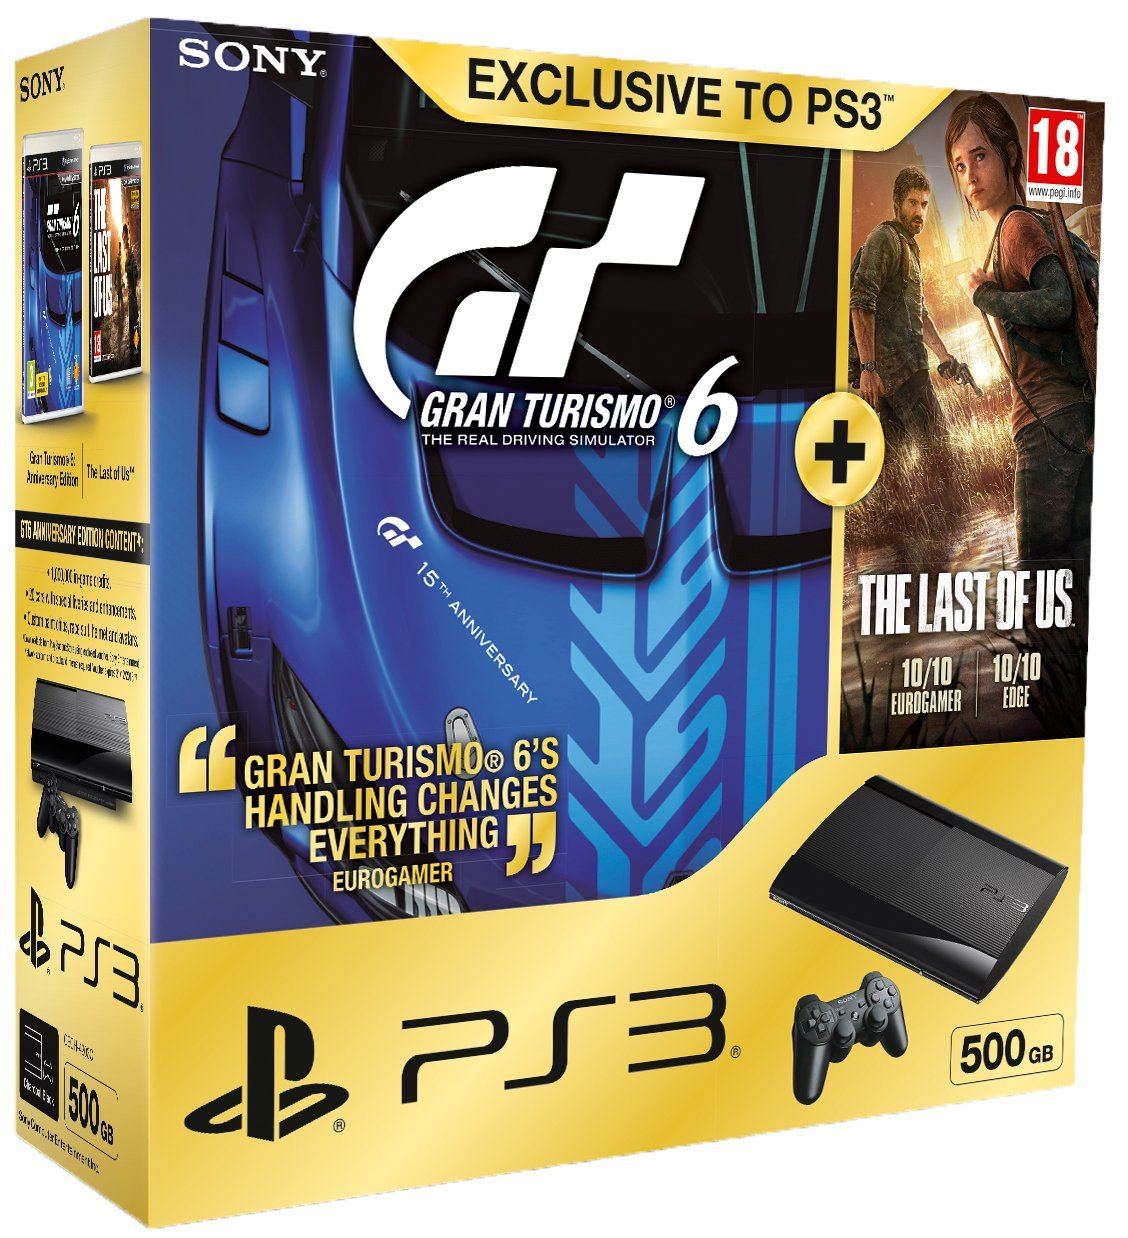 PlayStation3 Super Slim Console - Gran Turismo 6 & The Last of Us